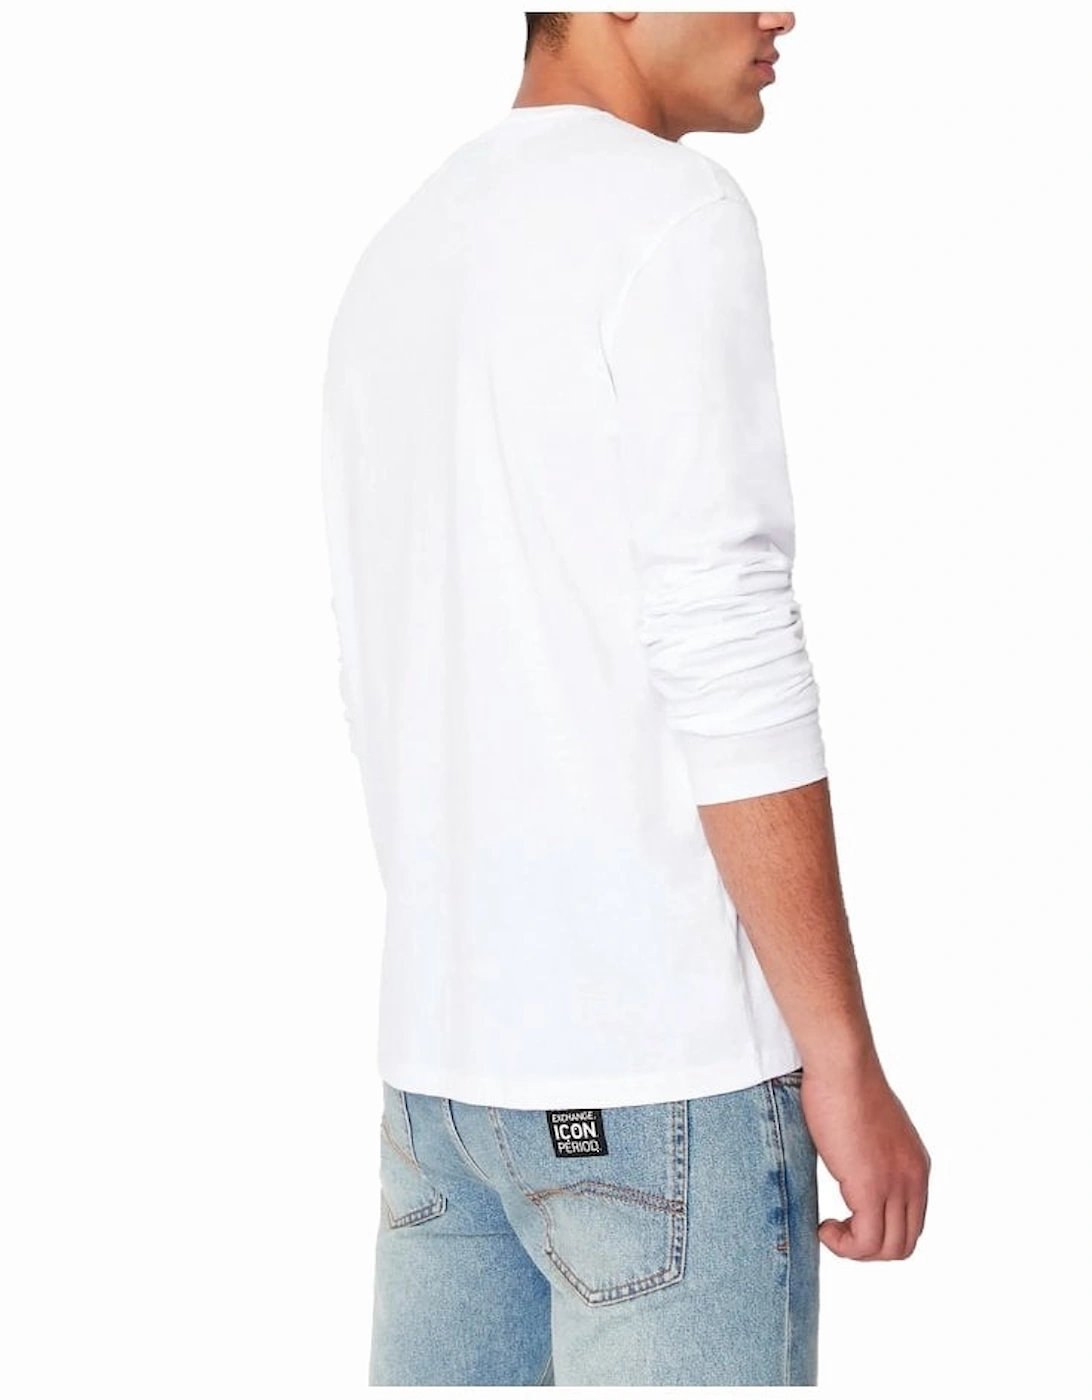 Ikon Period Long Sleeve T Shirt White